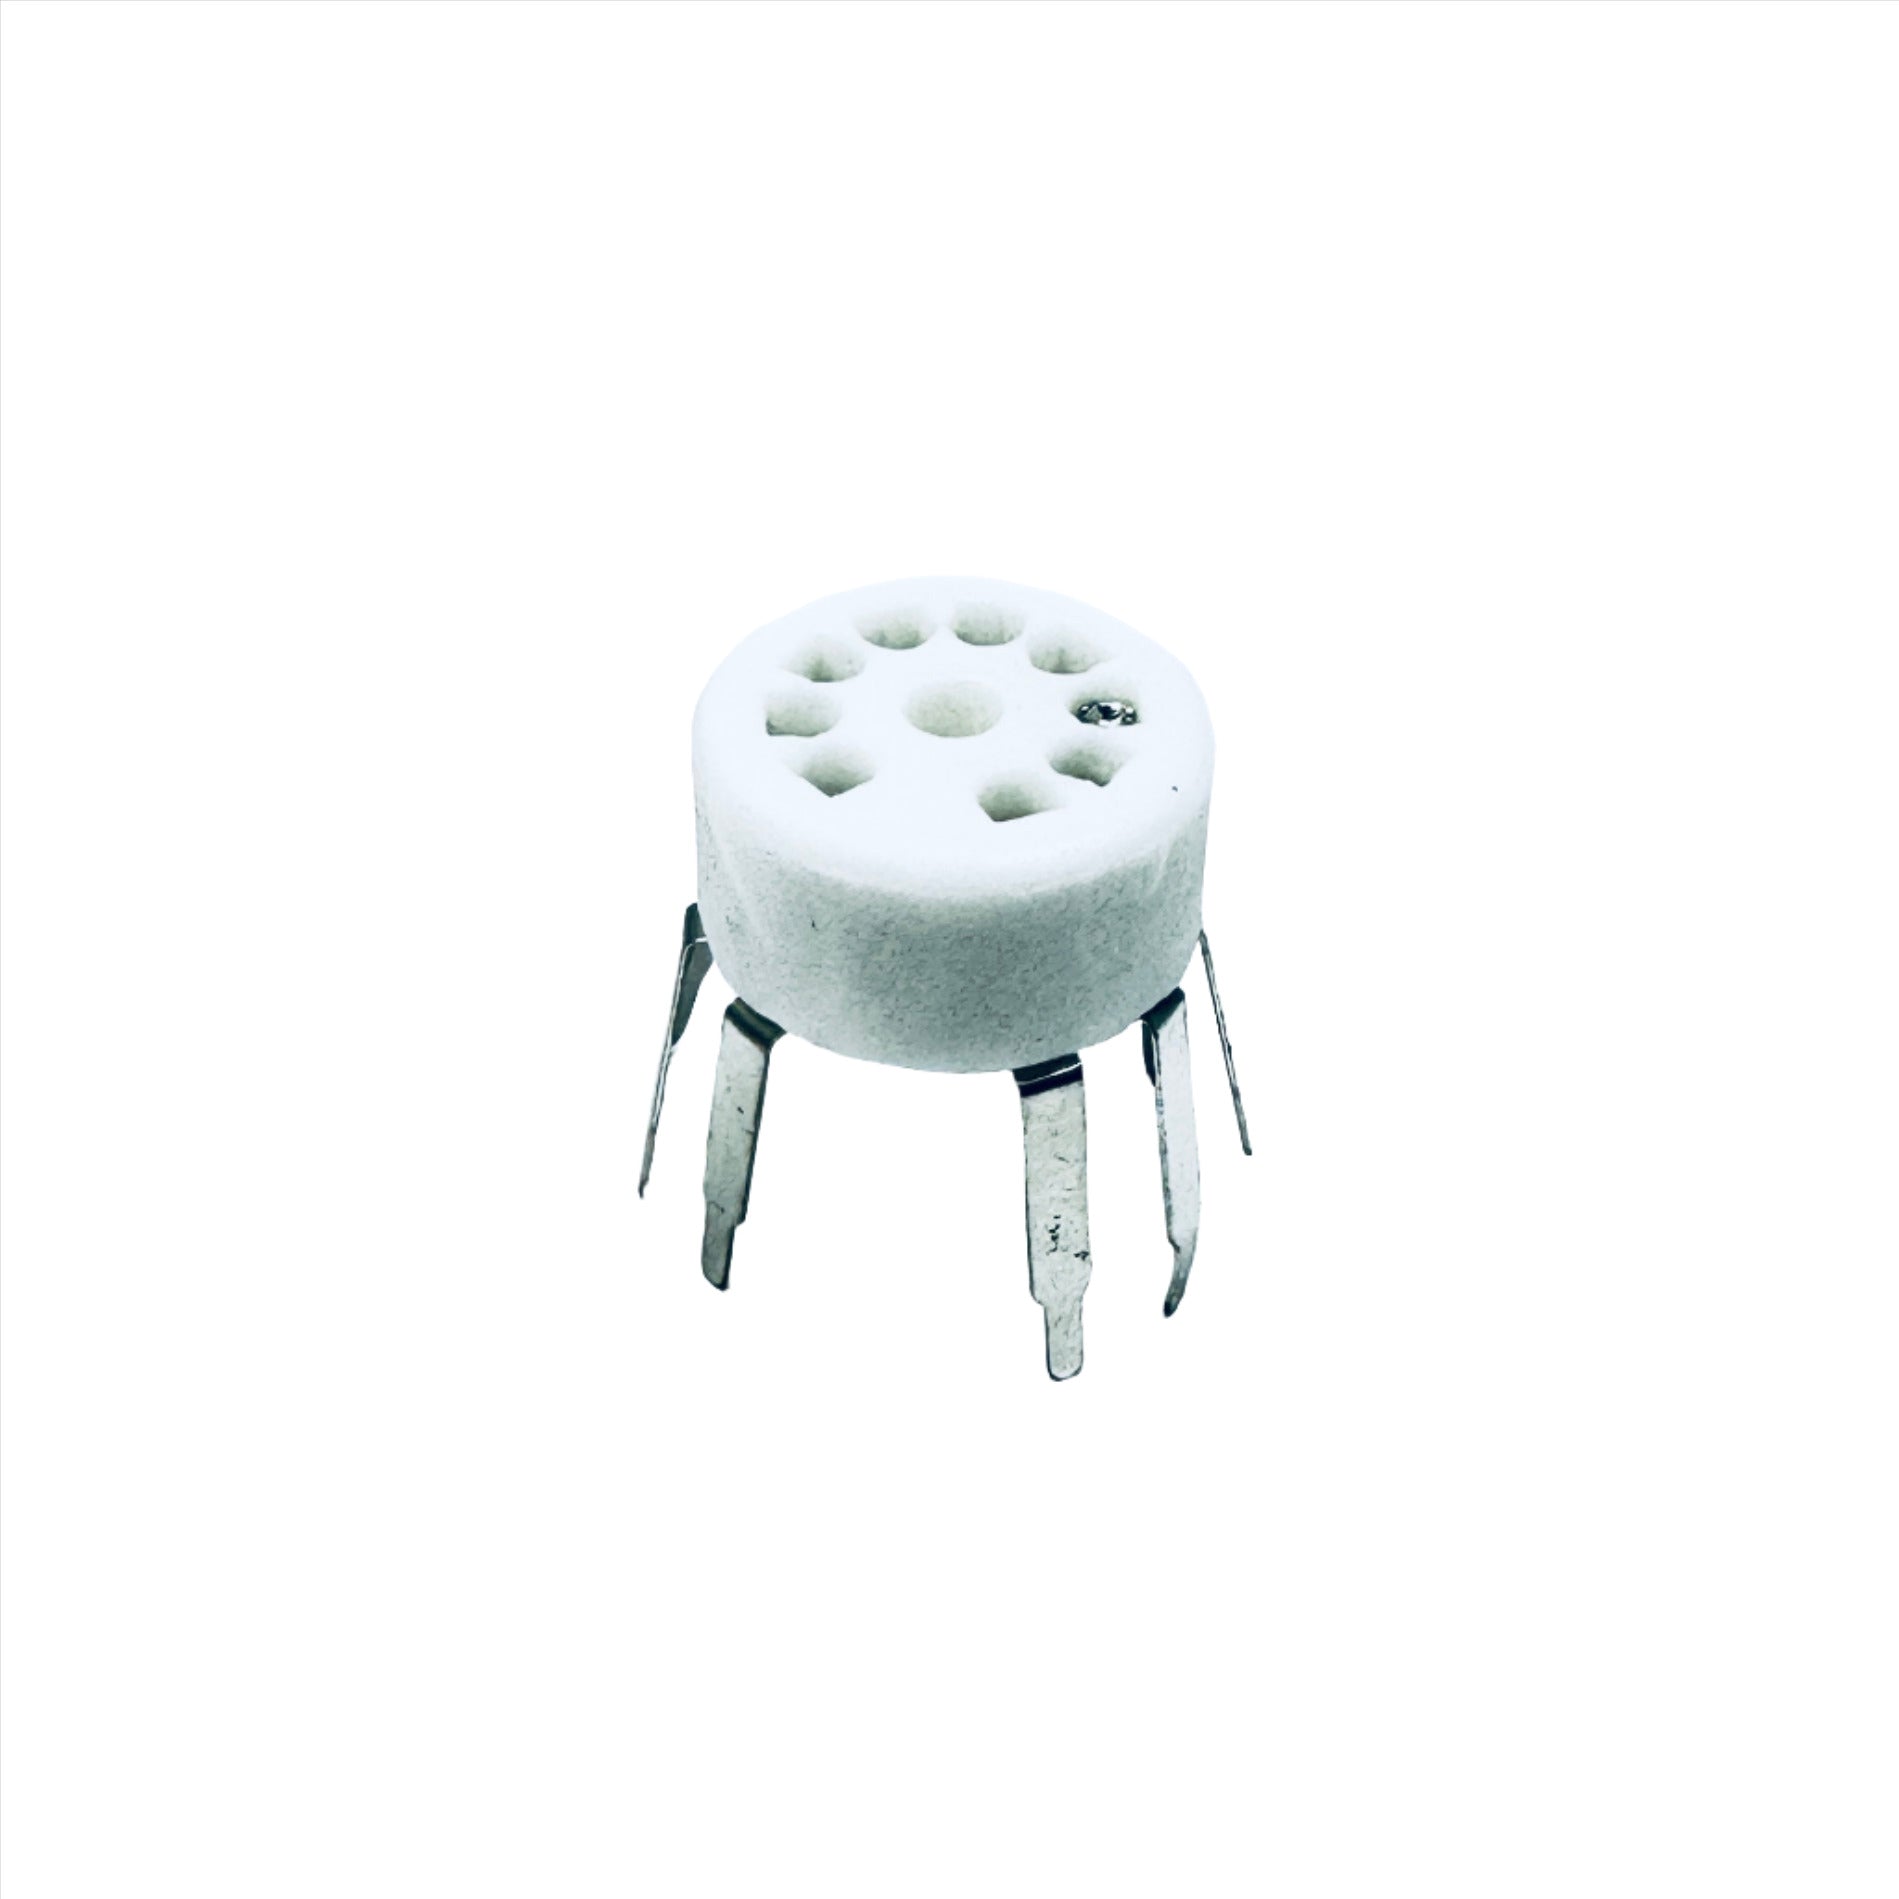 Ceramic 9 Pin Socket W/ Long Leads- TUS9PC15, ceramic socket, ruby sockets, long leads